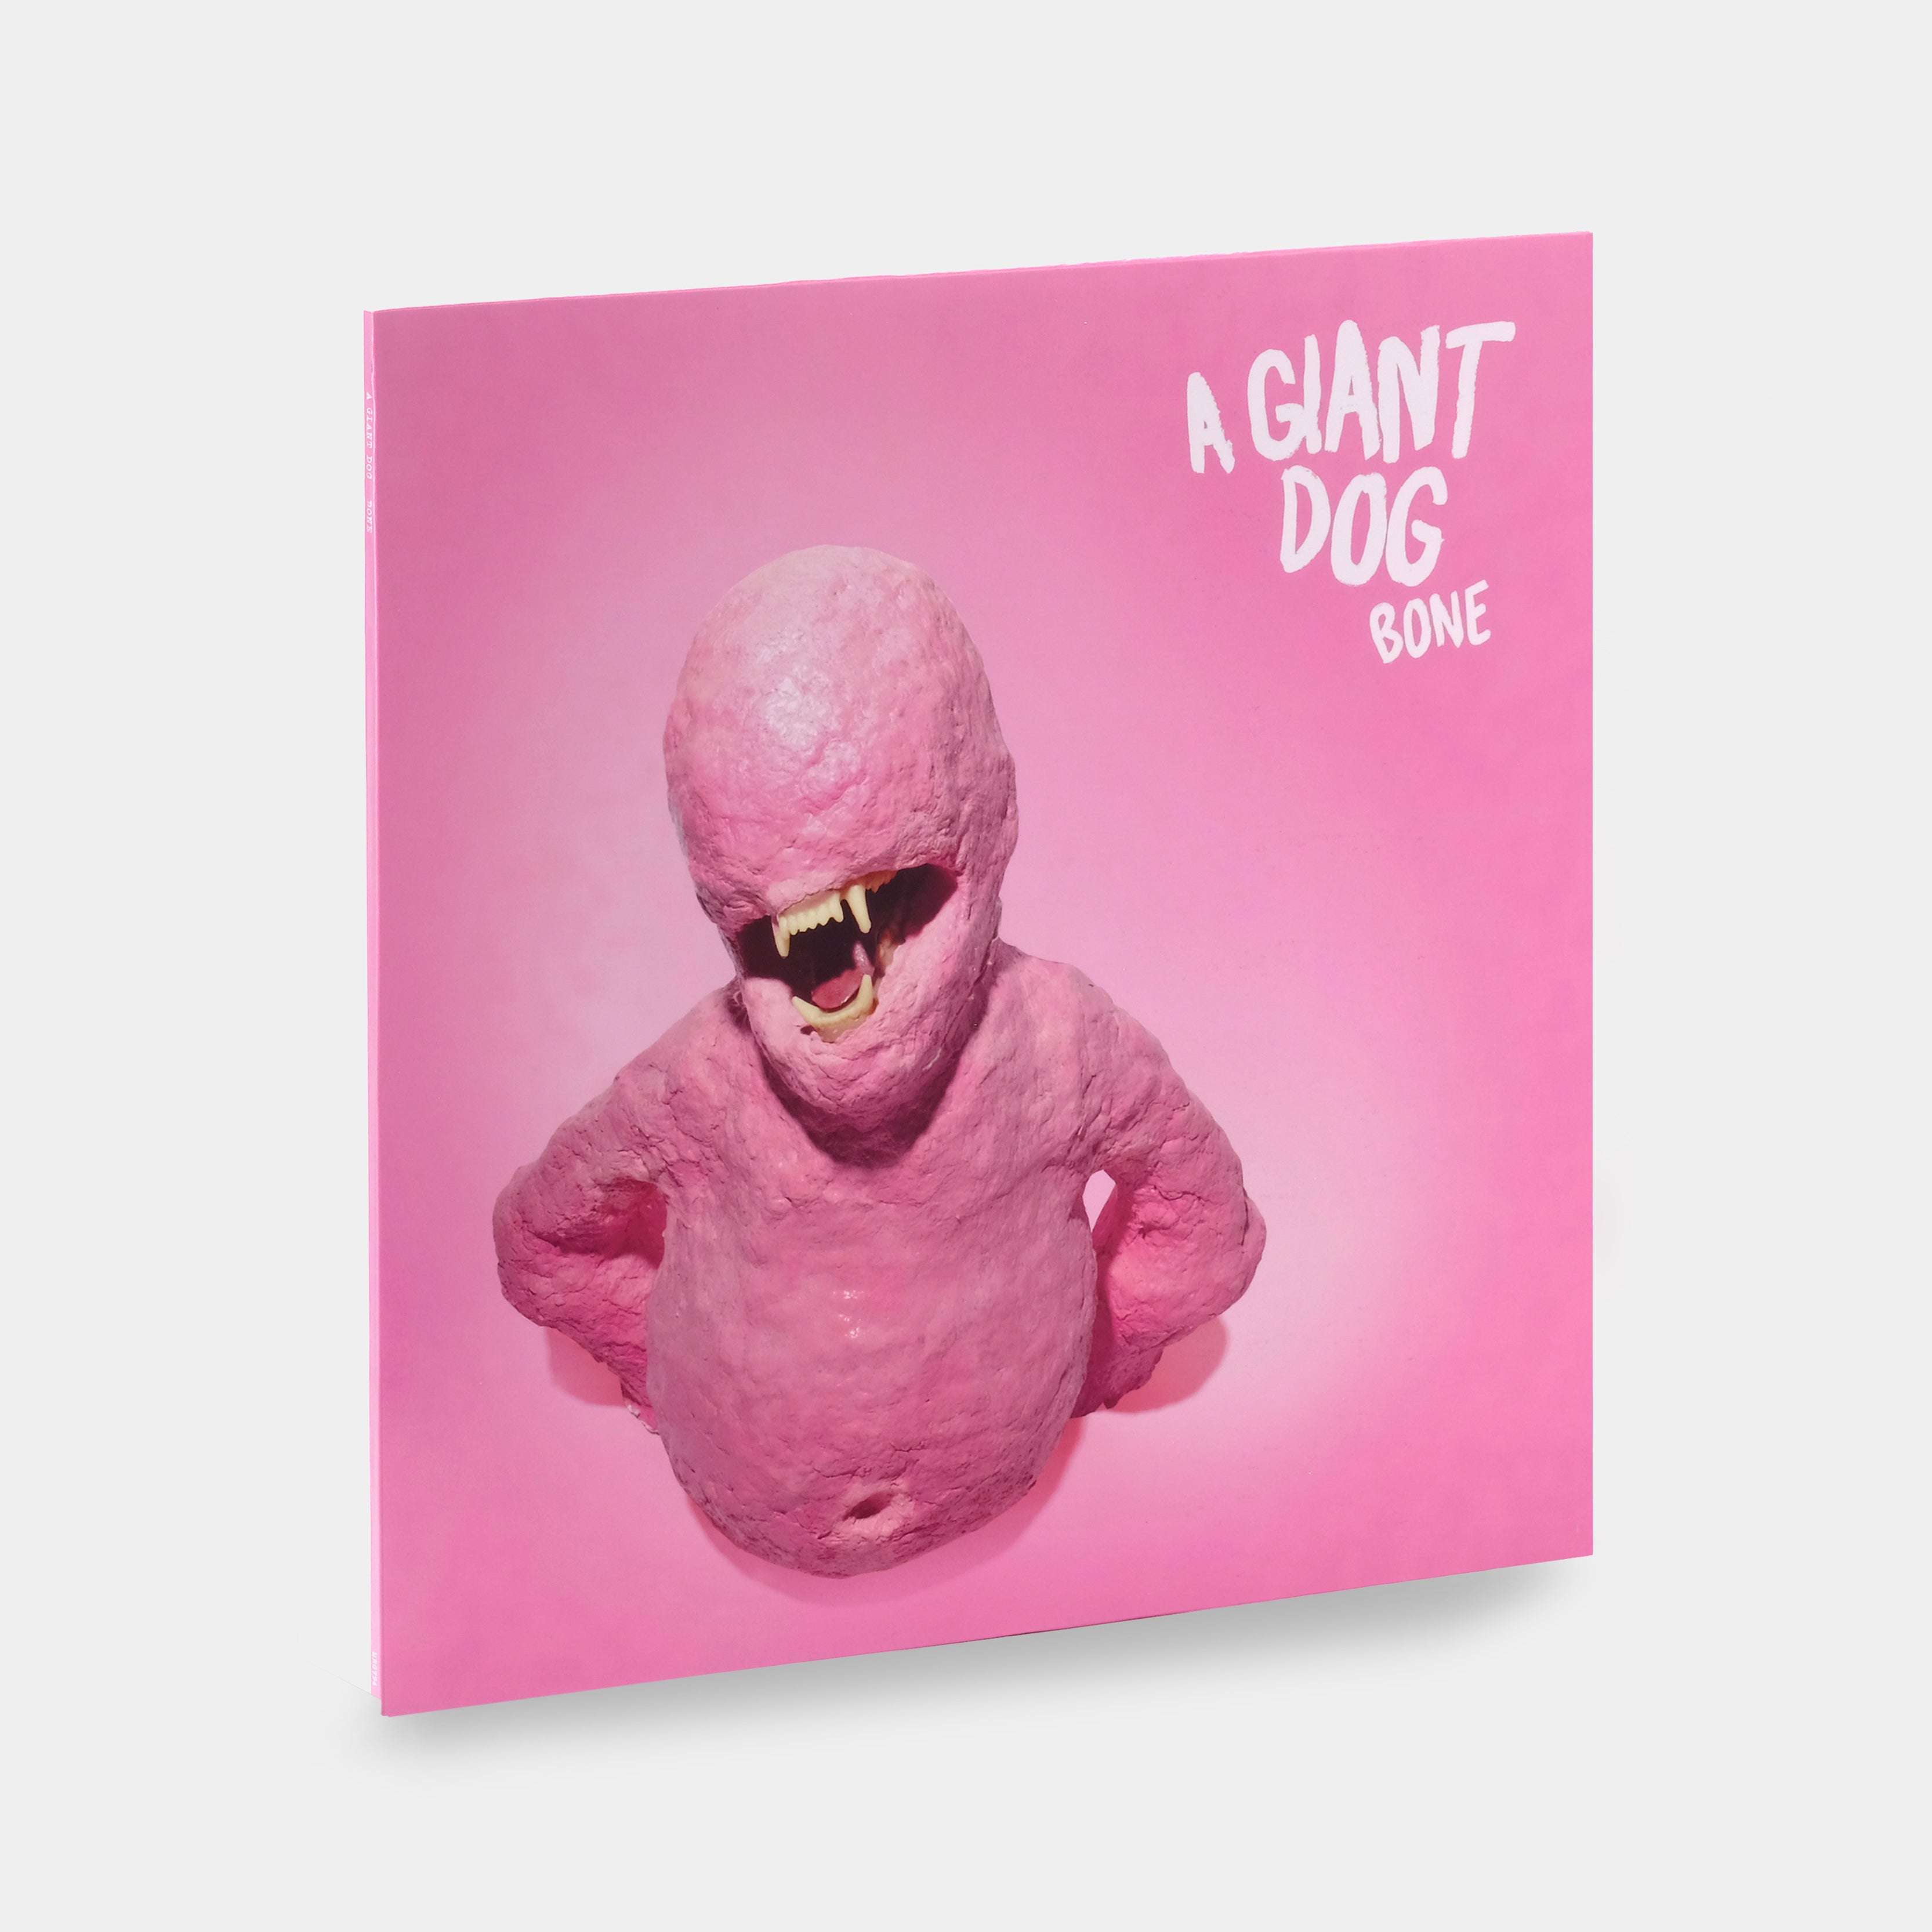 A Giant Dog - Bone LP Pink Vinyl Record